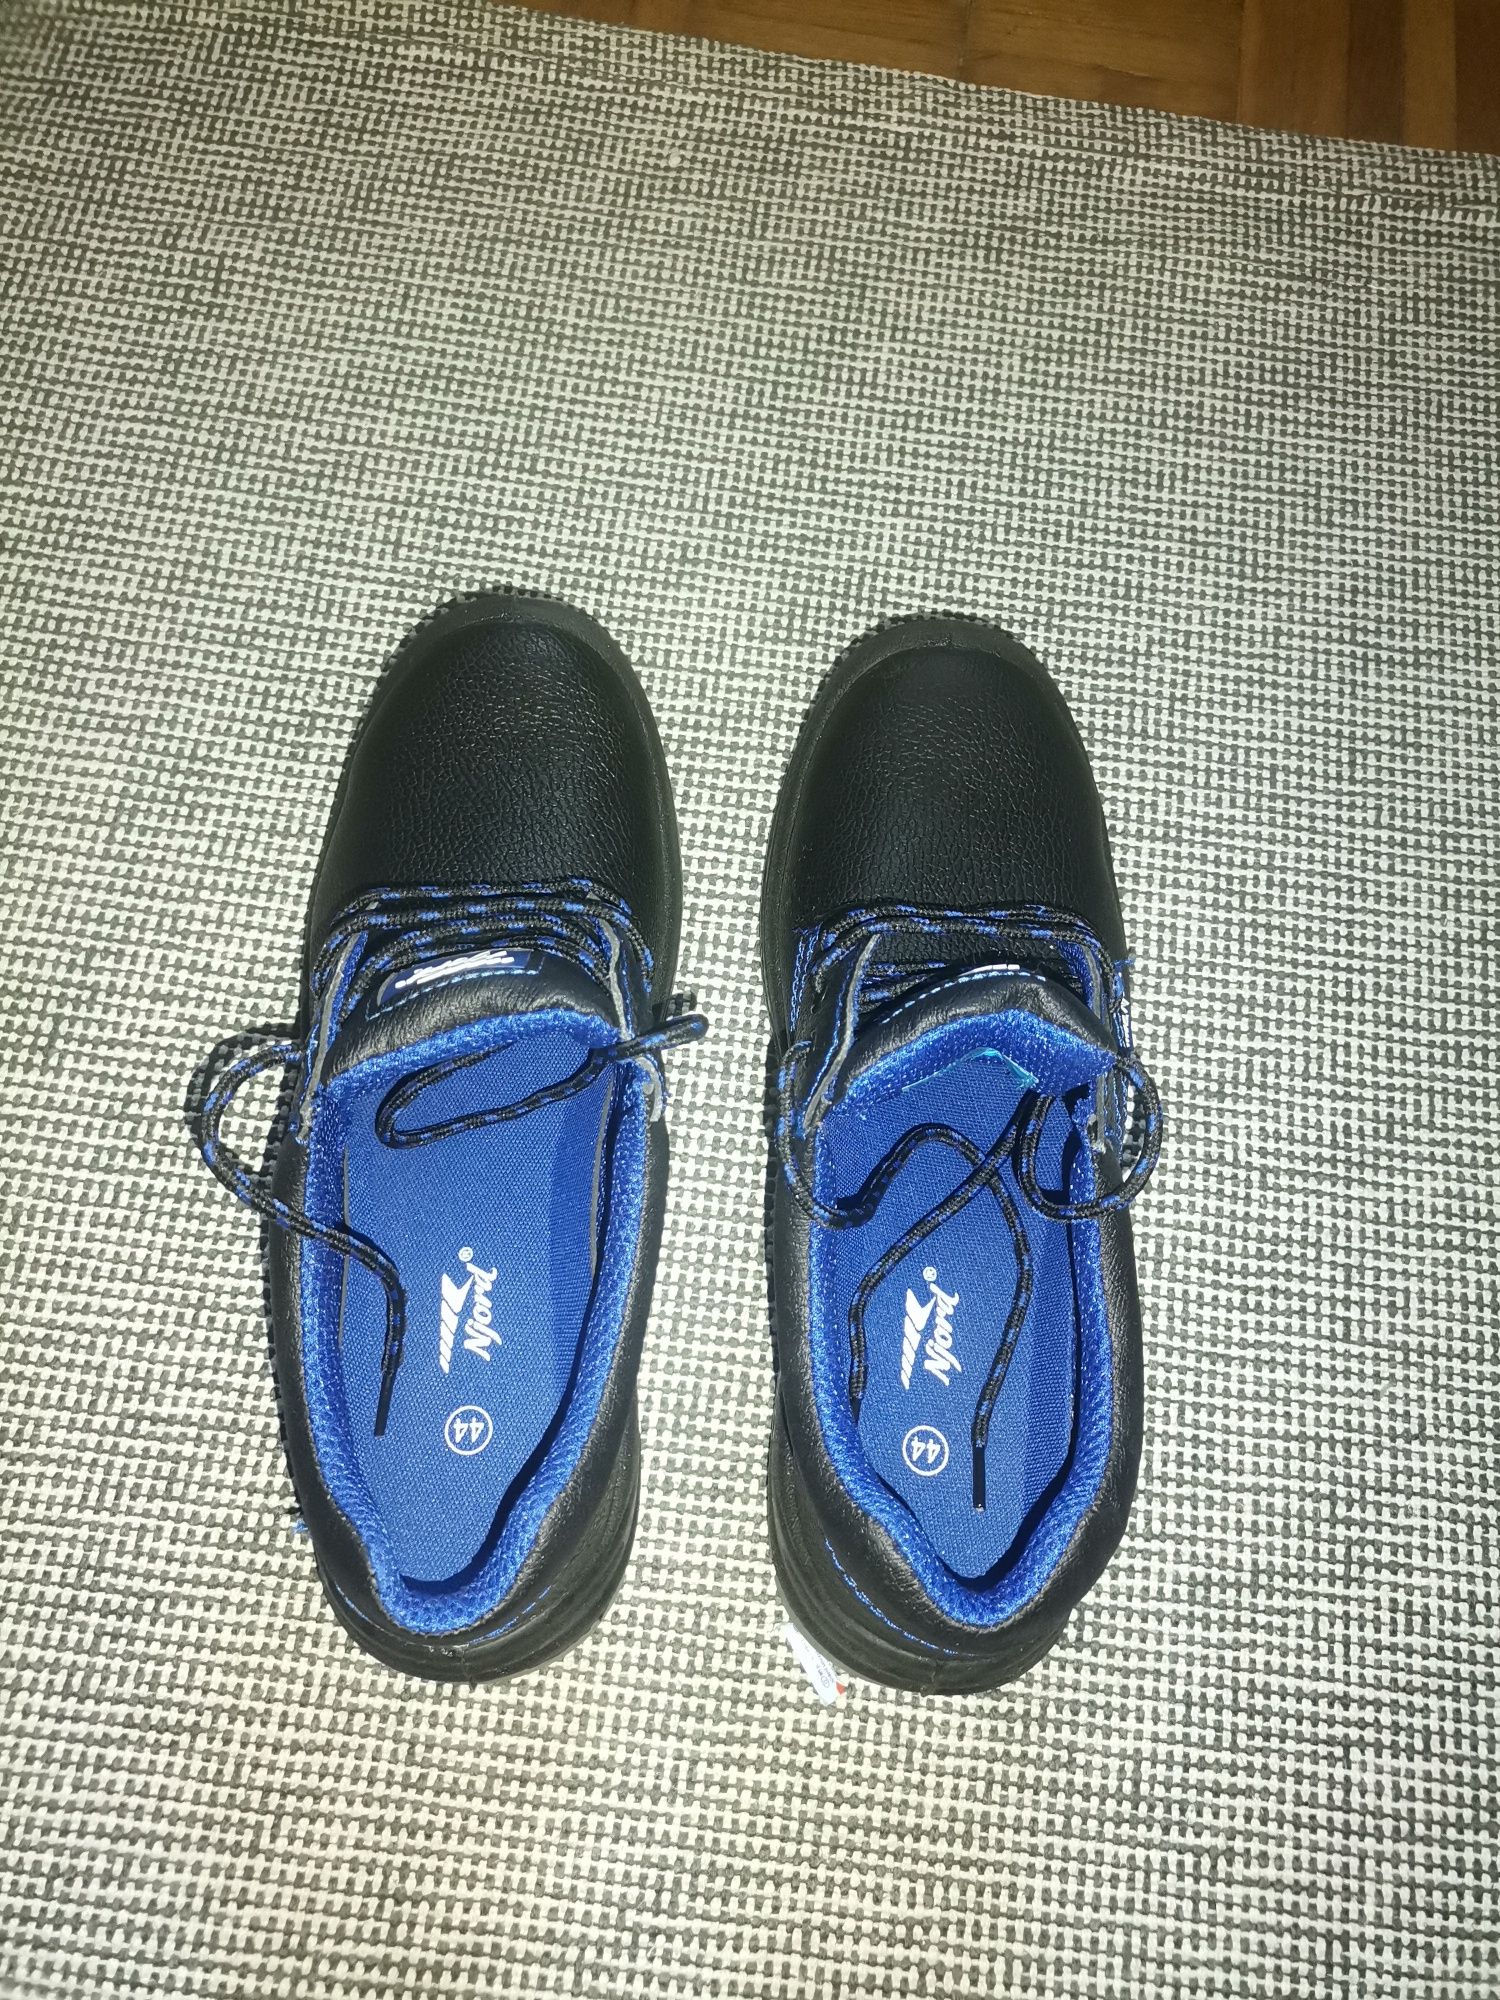 Pantofi protecție Njord mărimea 44